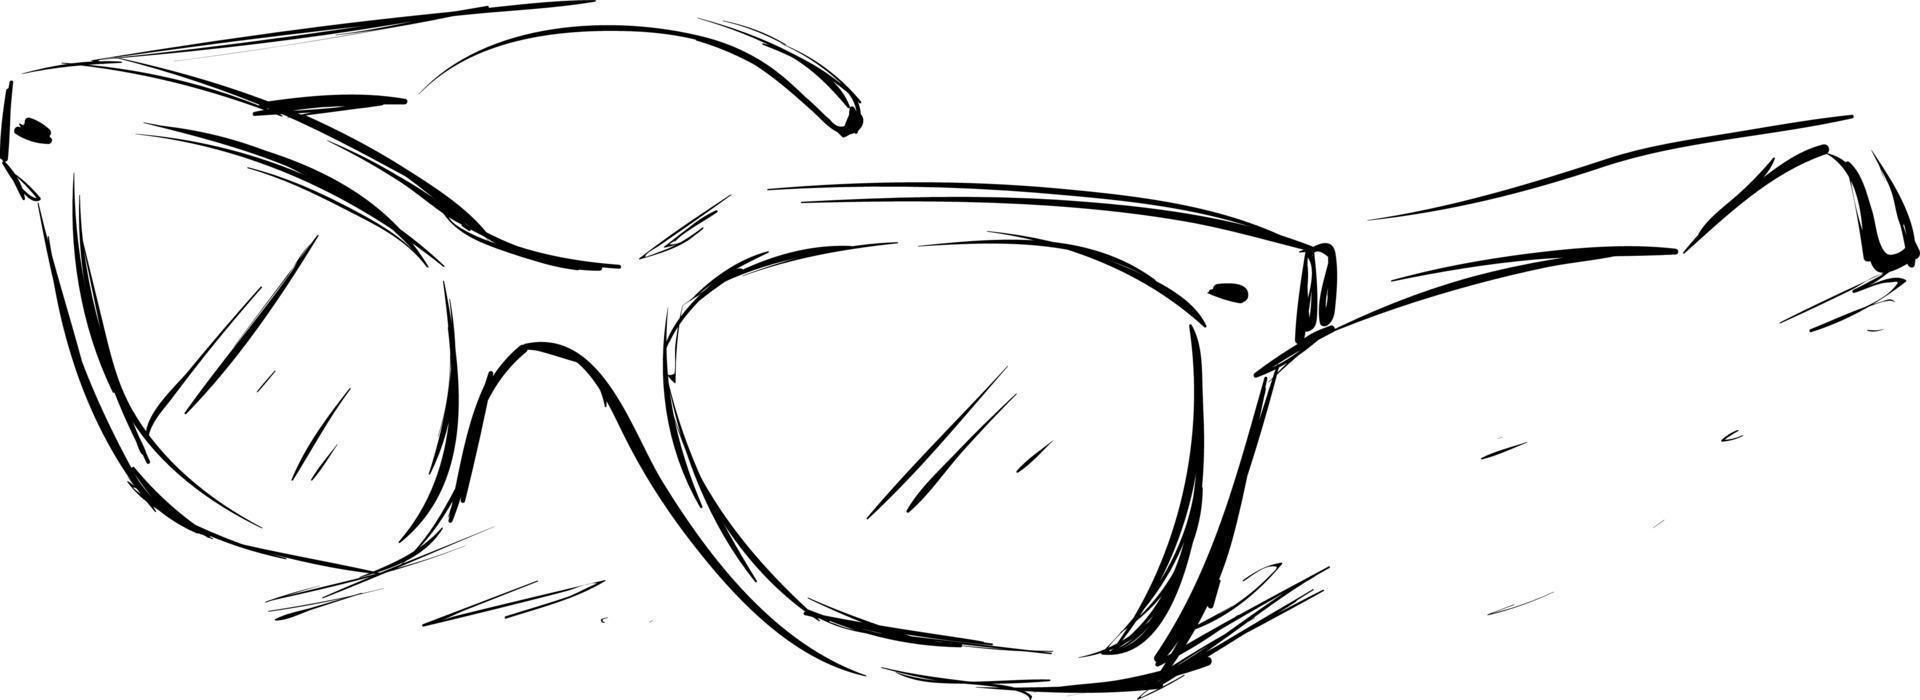 Glasses sketch, illustration, vector on white background.